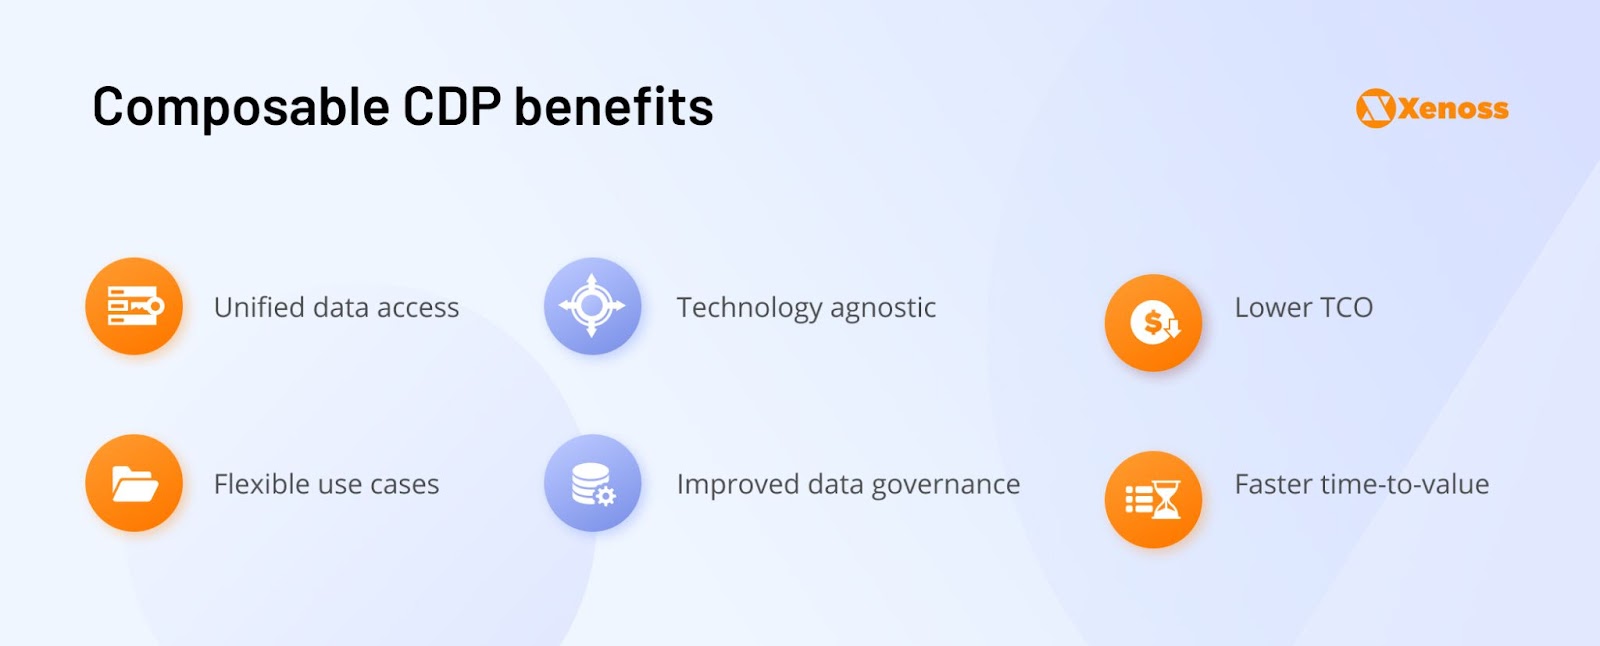 Composable CDP benefits | Xenoss Blog